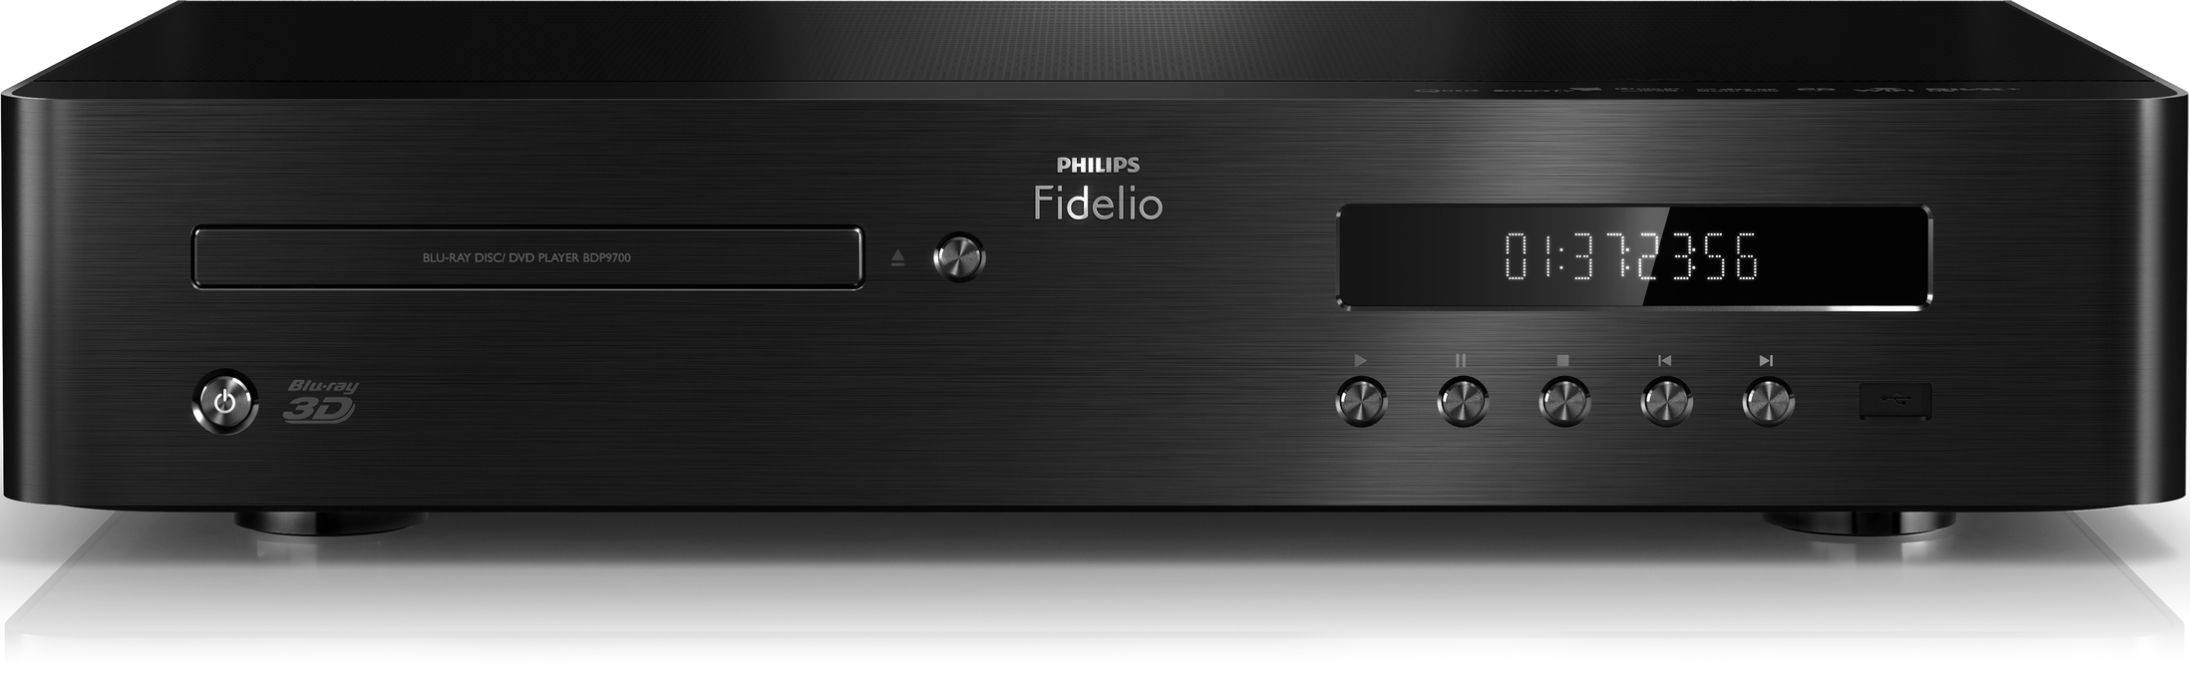  Philips Fidelio BDP9700/12 Blu-ray Disc player